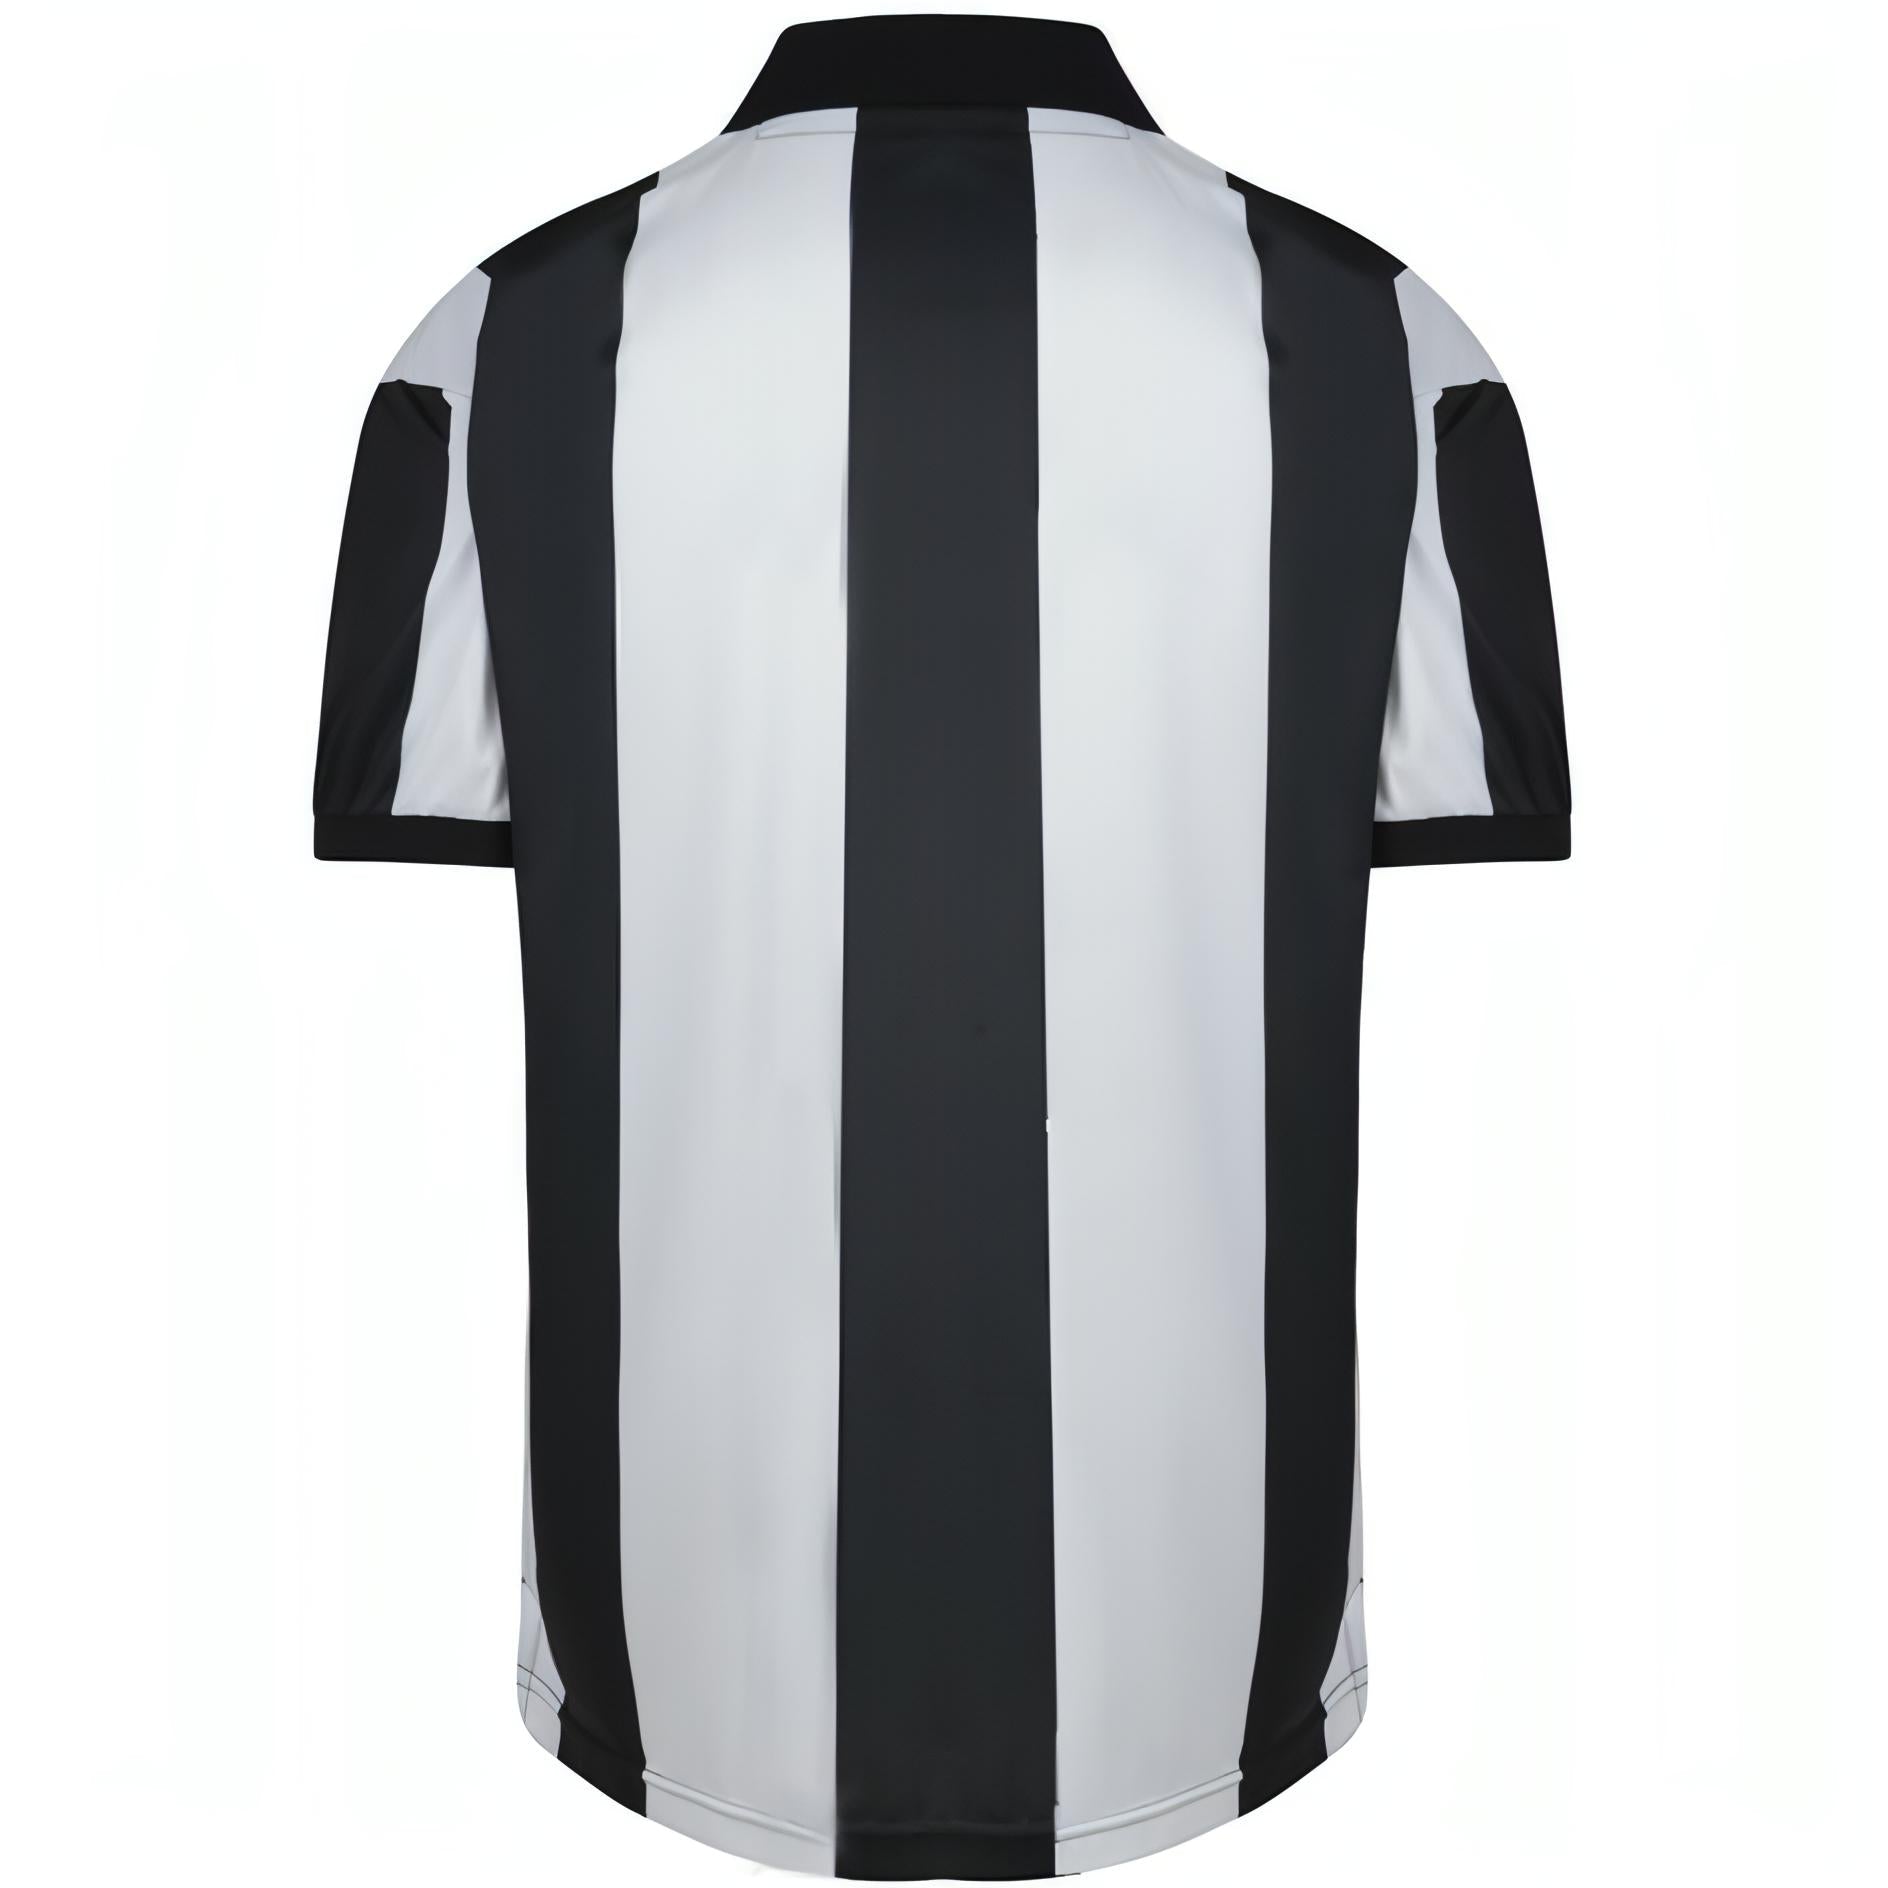 Score Draw Newcastle United Home Shirt Newc82Hpyss Back View